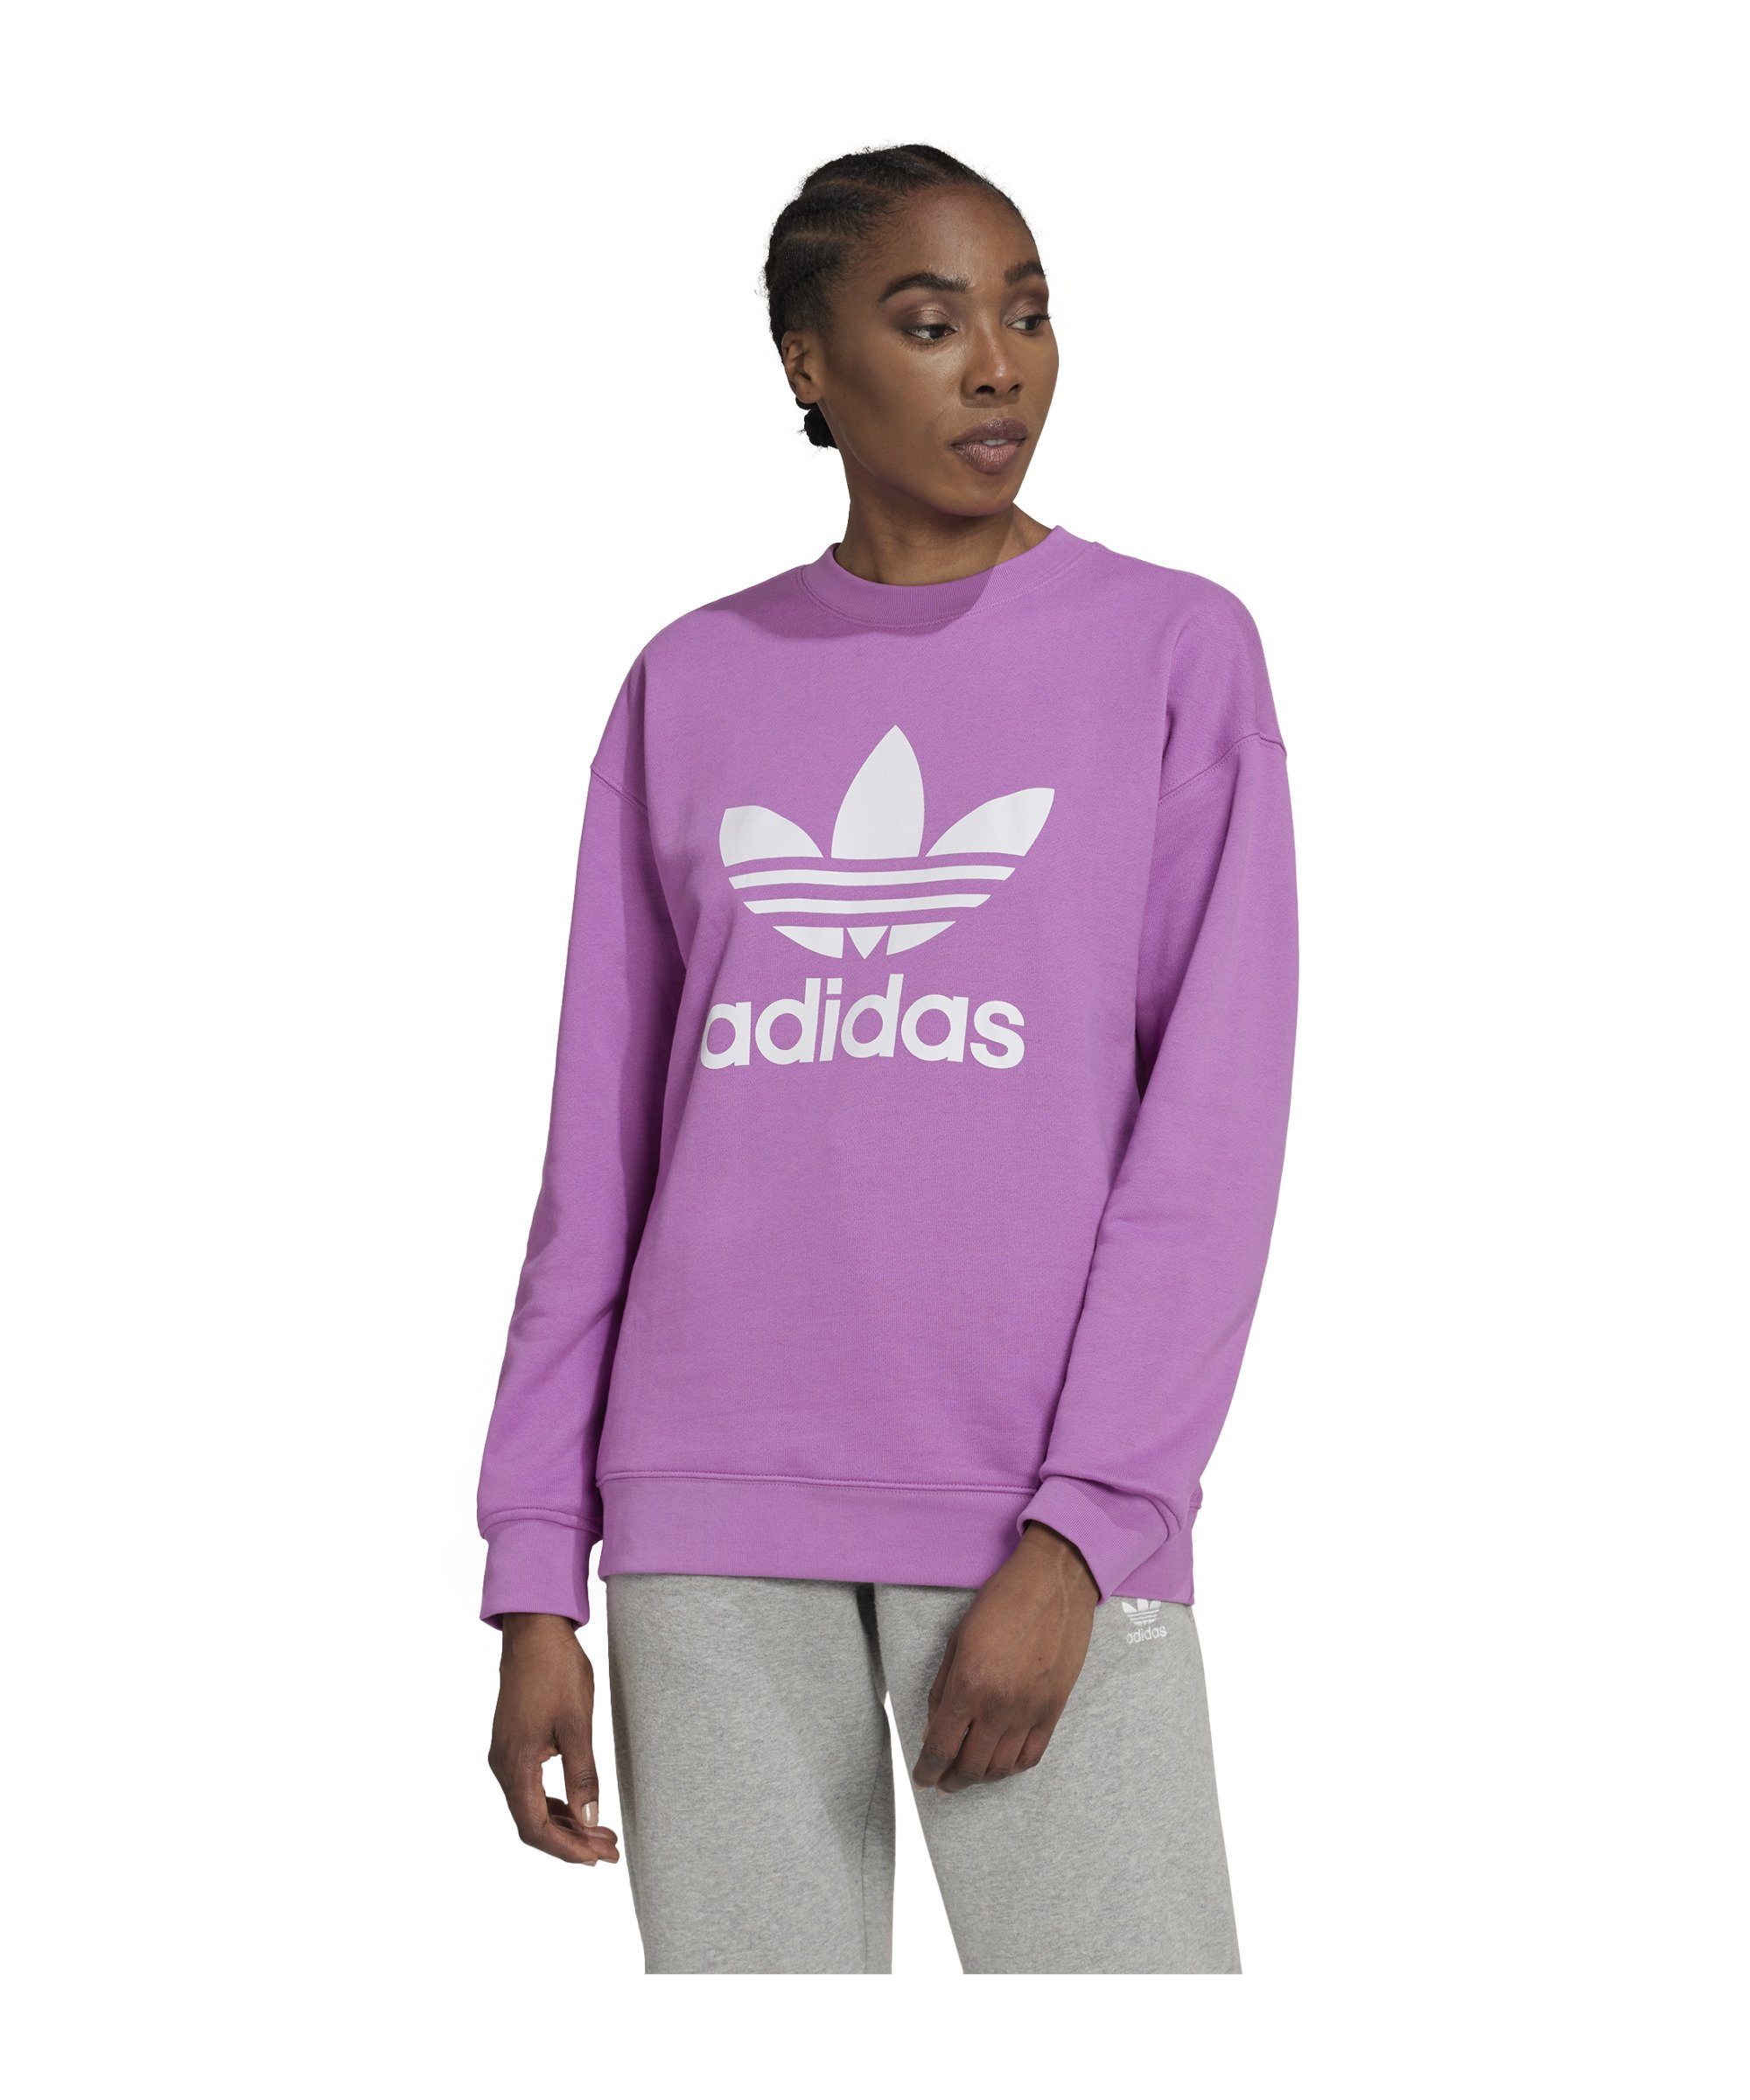 adidas Originals Sweater lila Sweatshirt Trefoil Damen